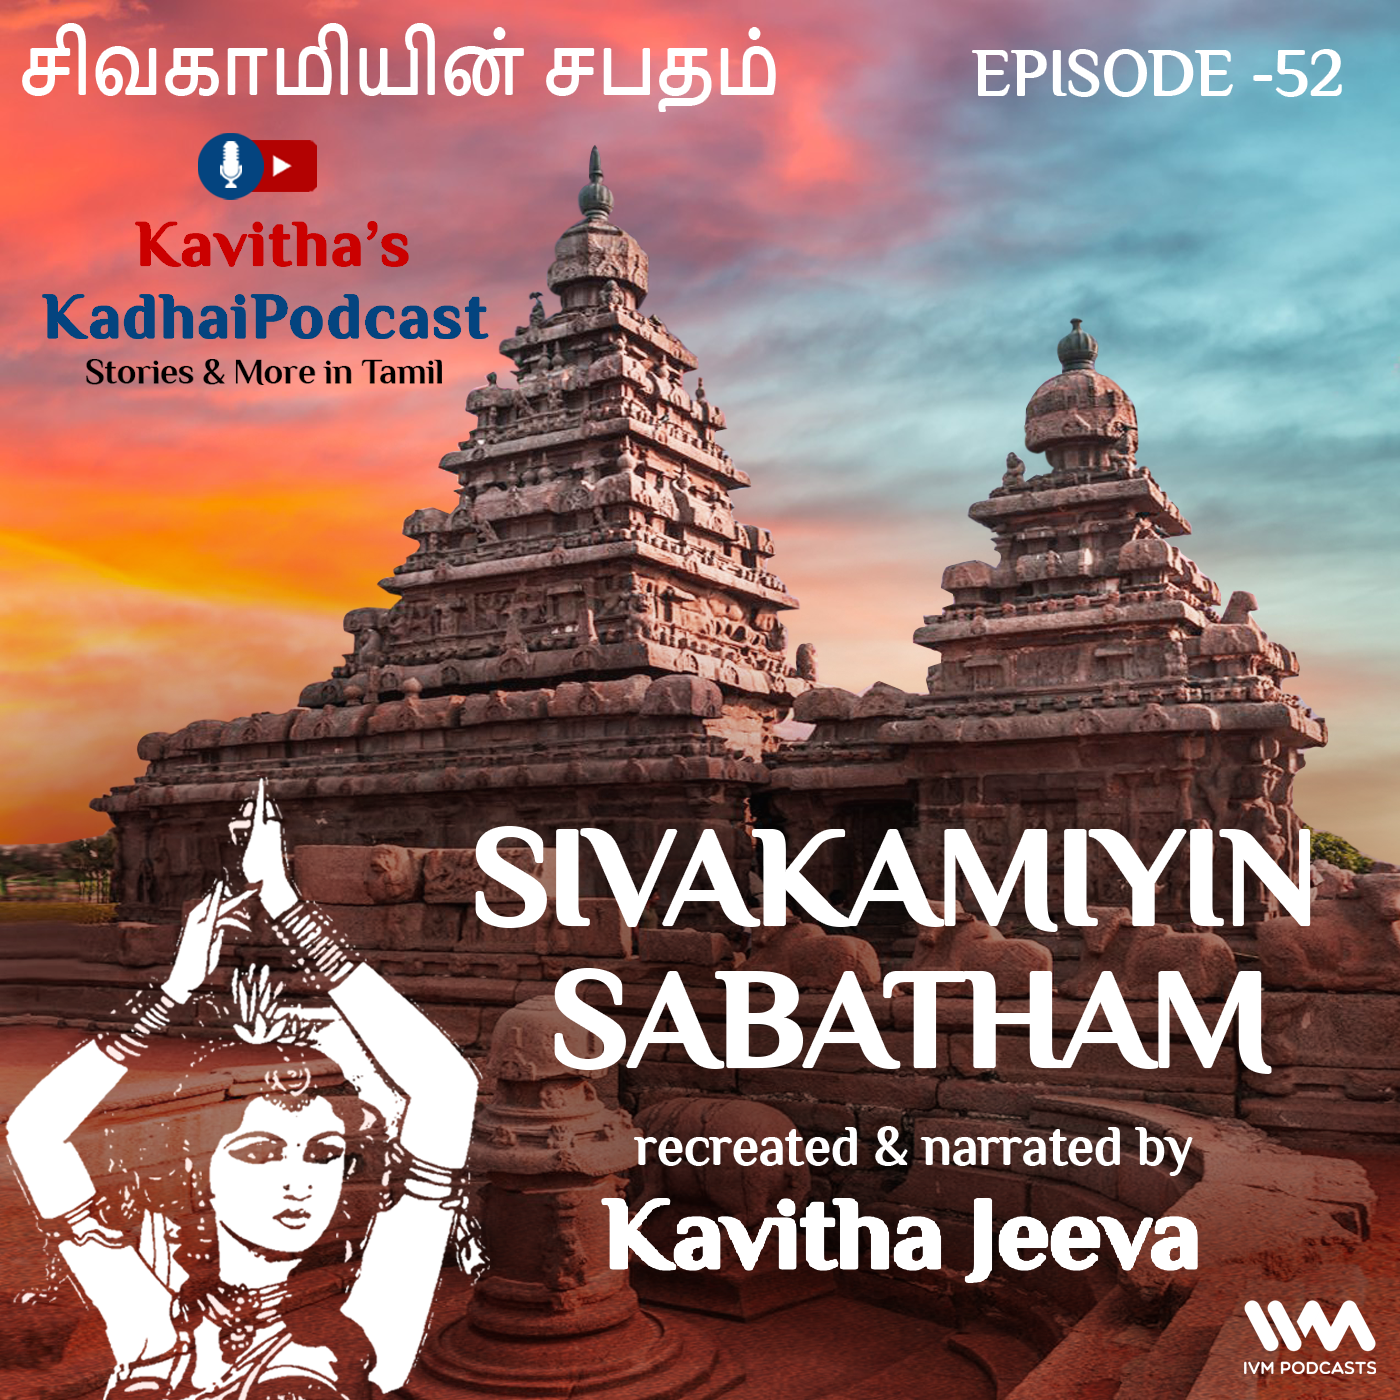 KadhaiPodcast's Sivakamiyin Sabatham - Episode # 52